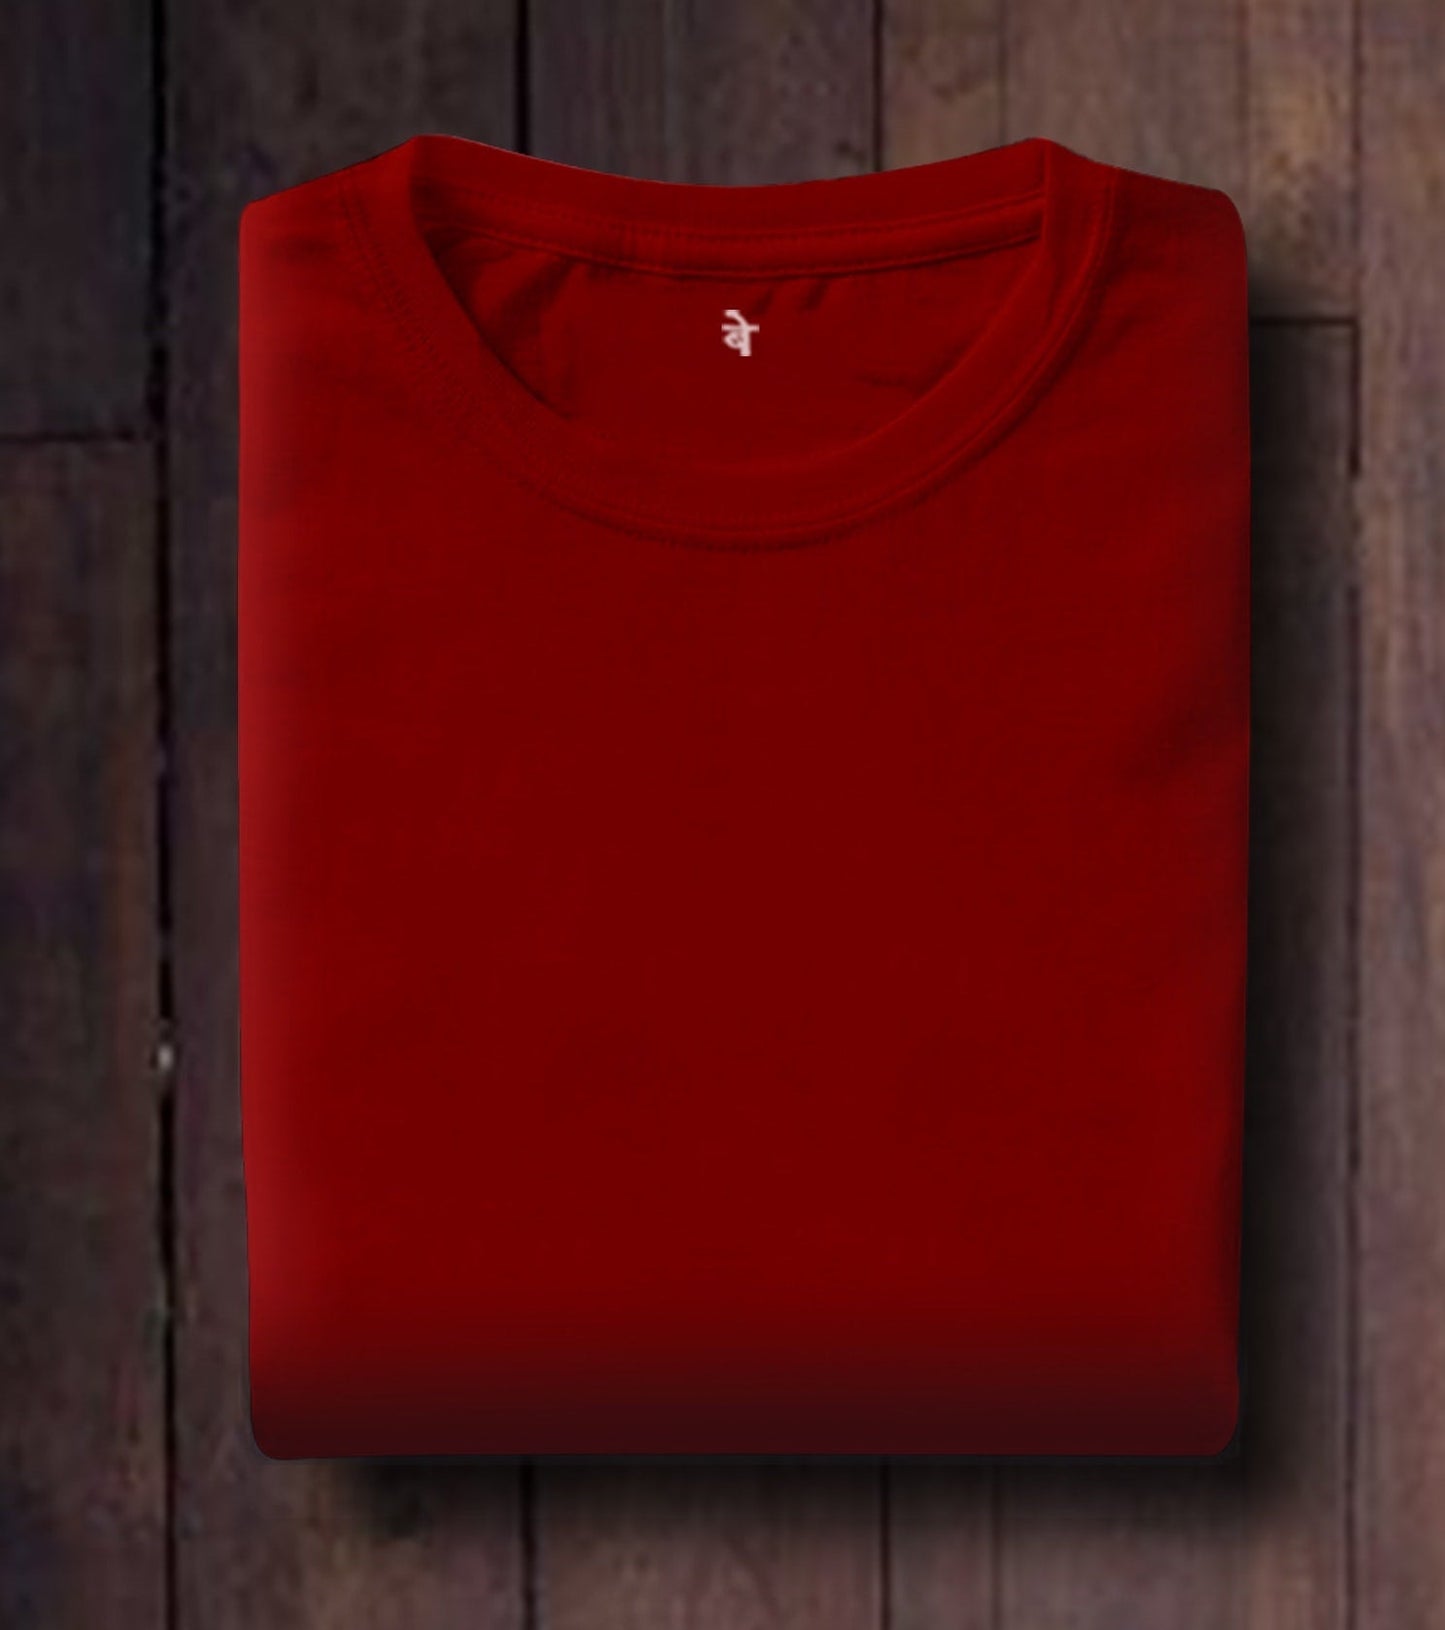 » Red Tshirt (50% off)